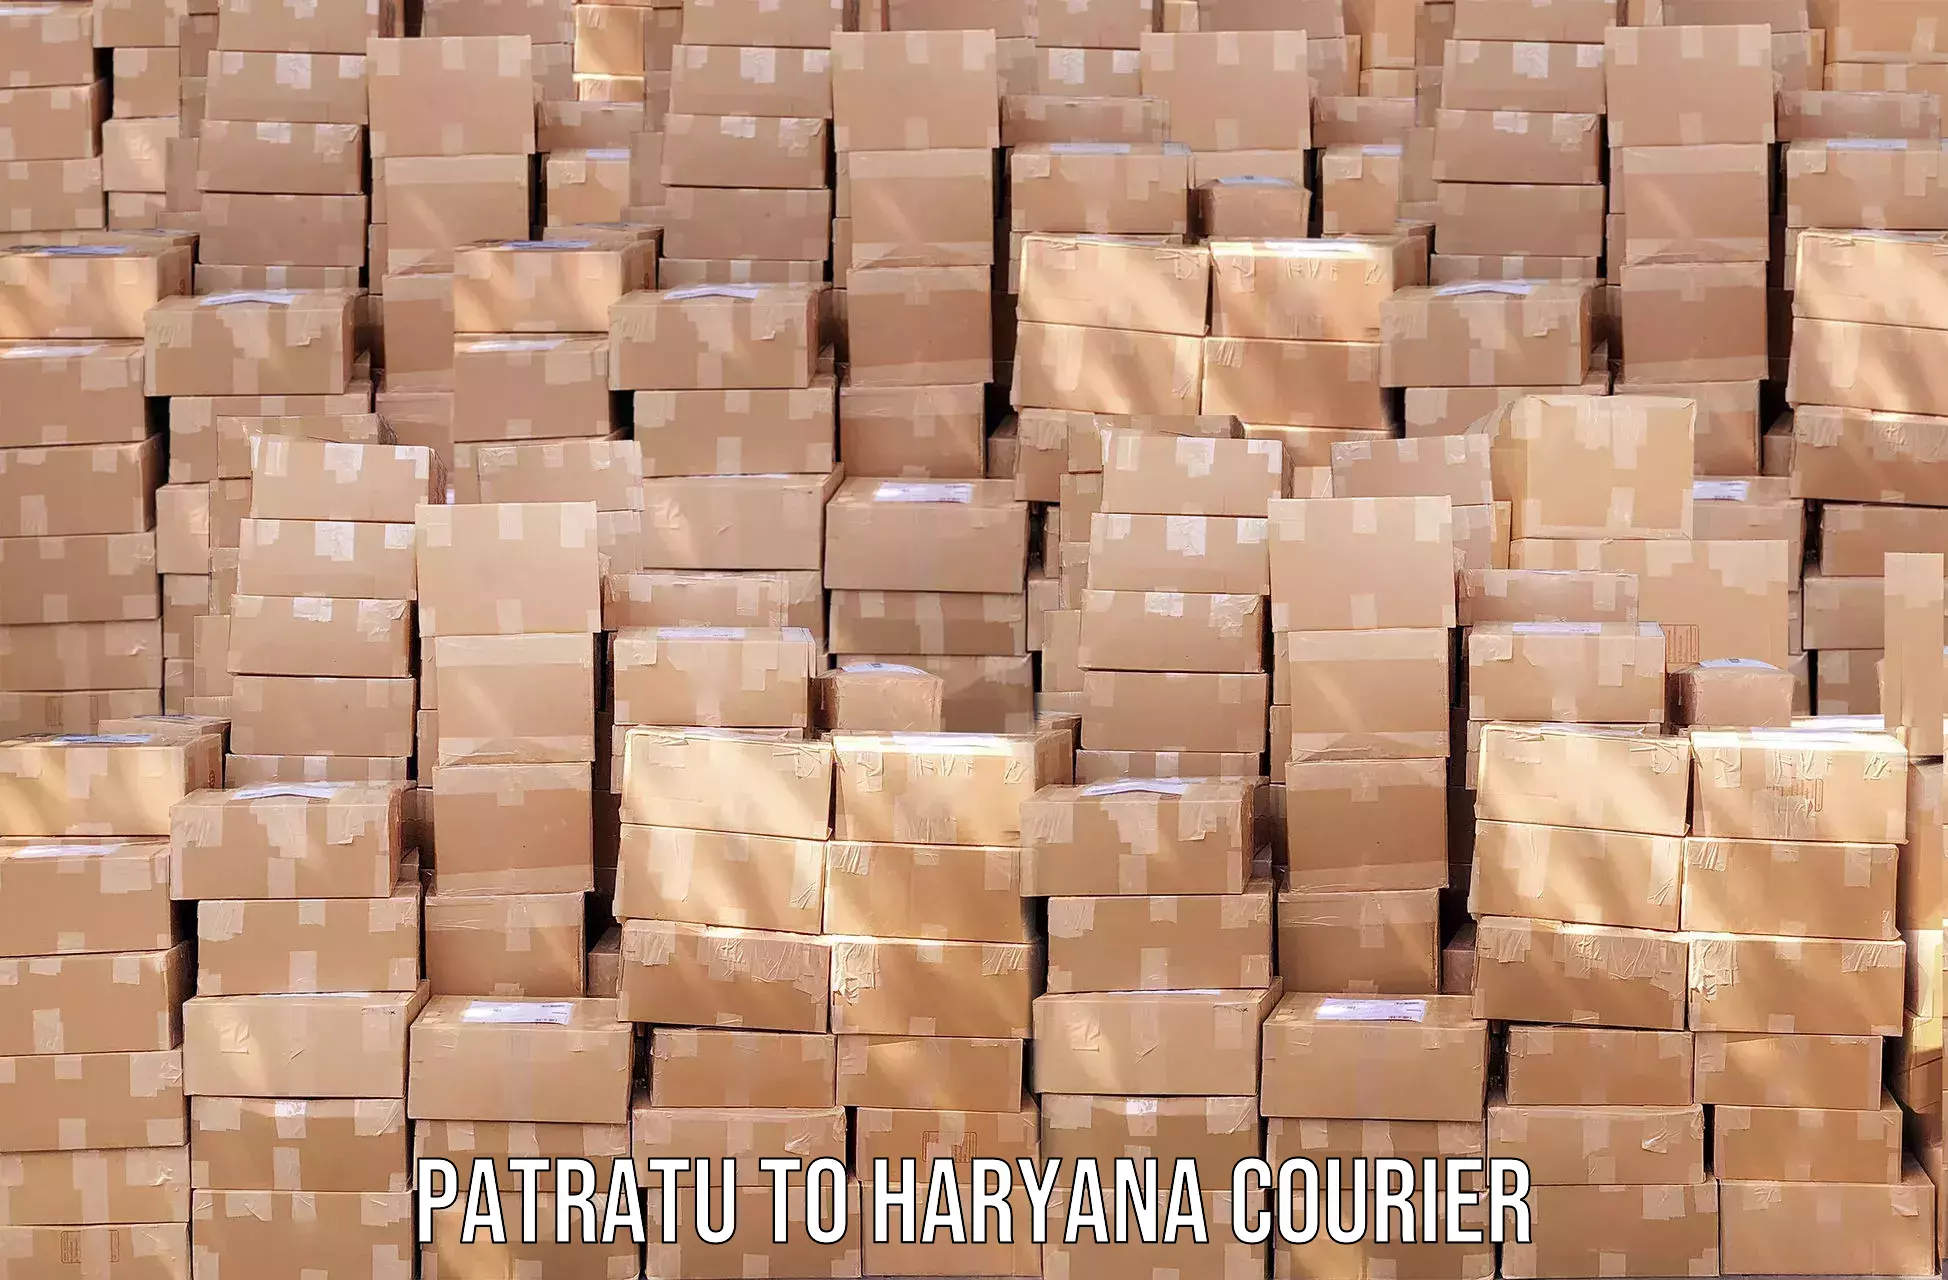 Courier service comparison Patratu to Palwal